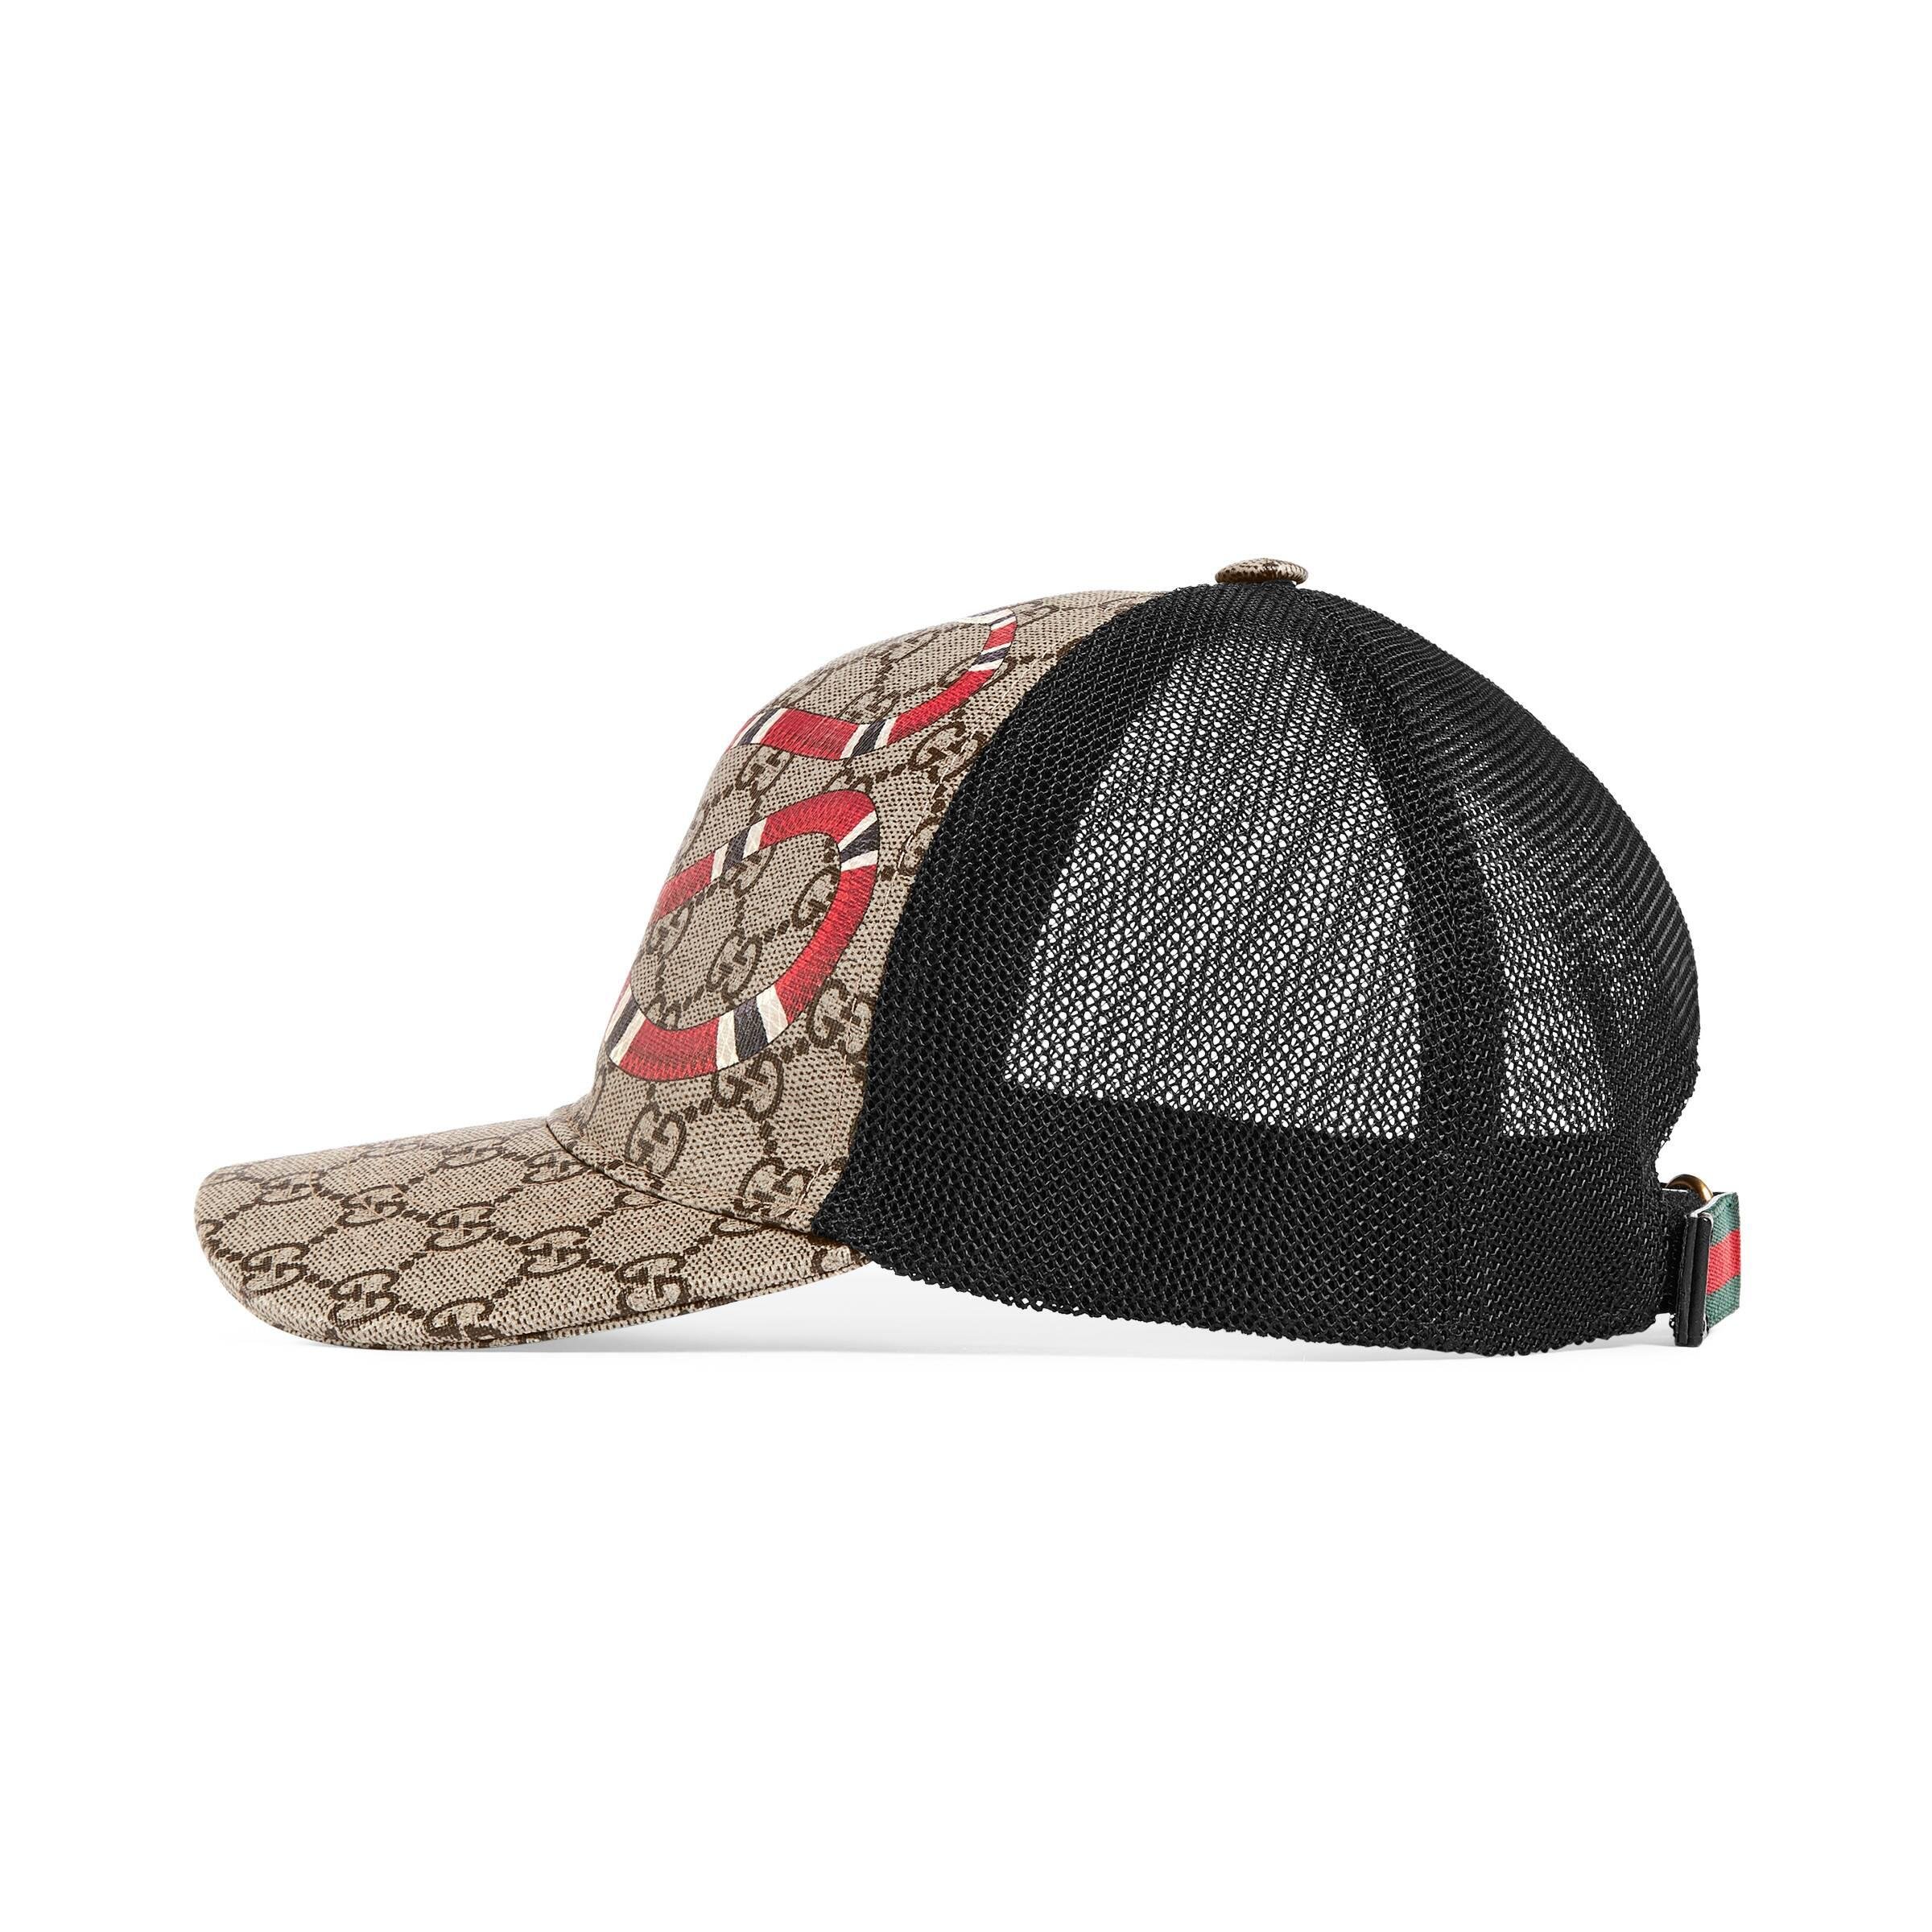 Gucci Canvas Kingsnake Print GG Baseball Hat in Beige for Men - Lyst